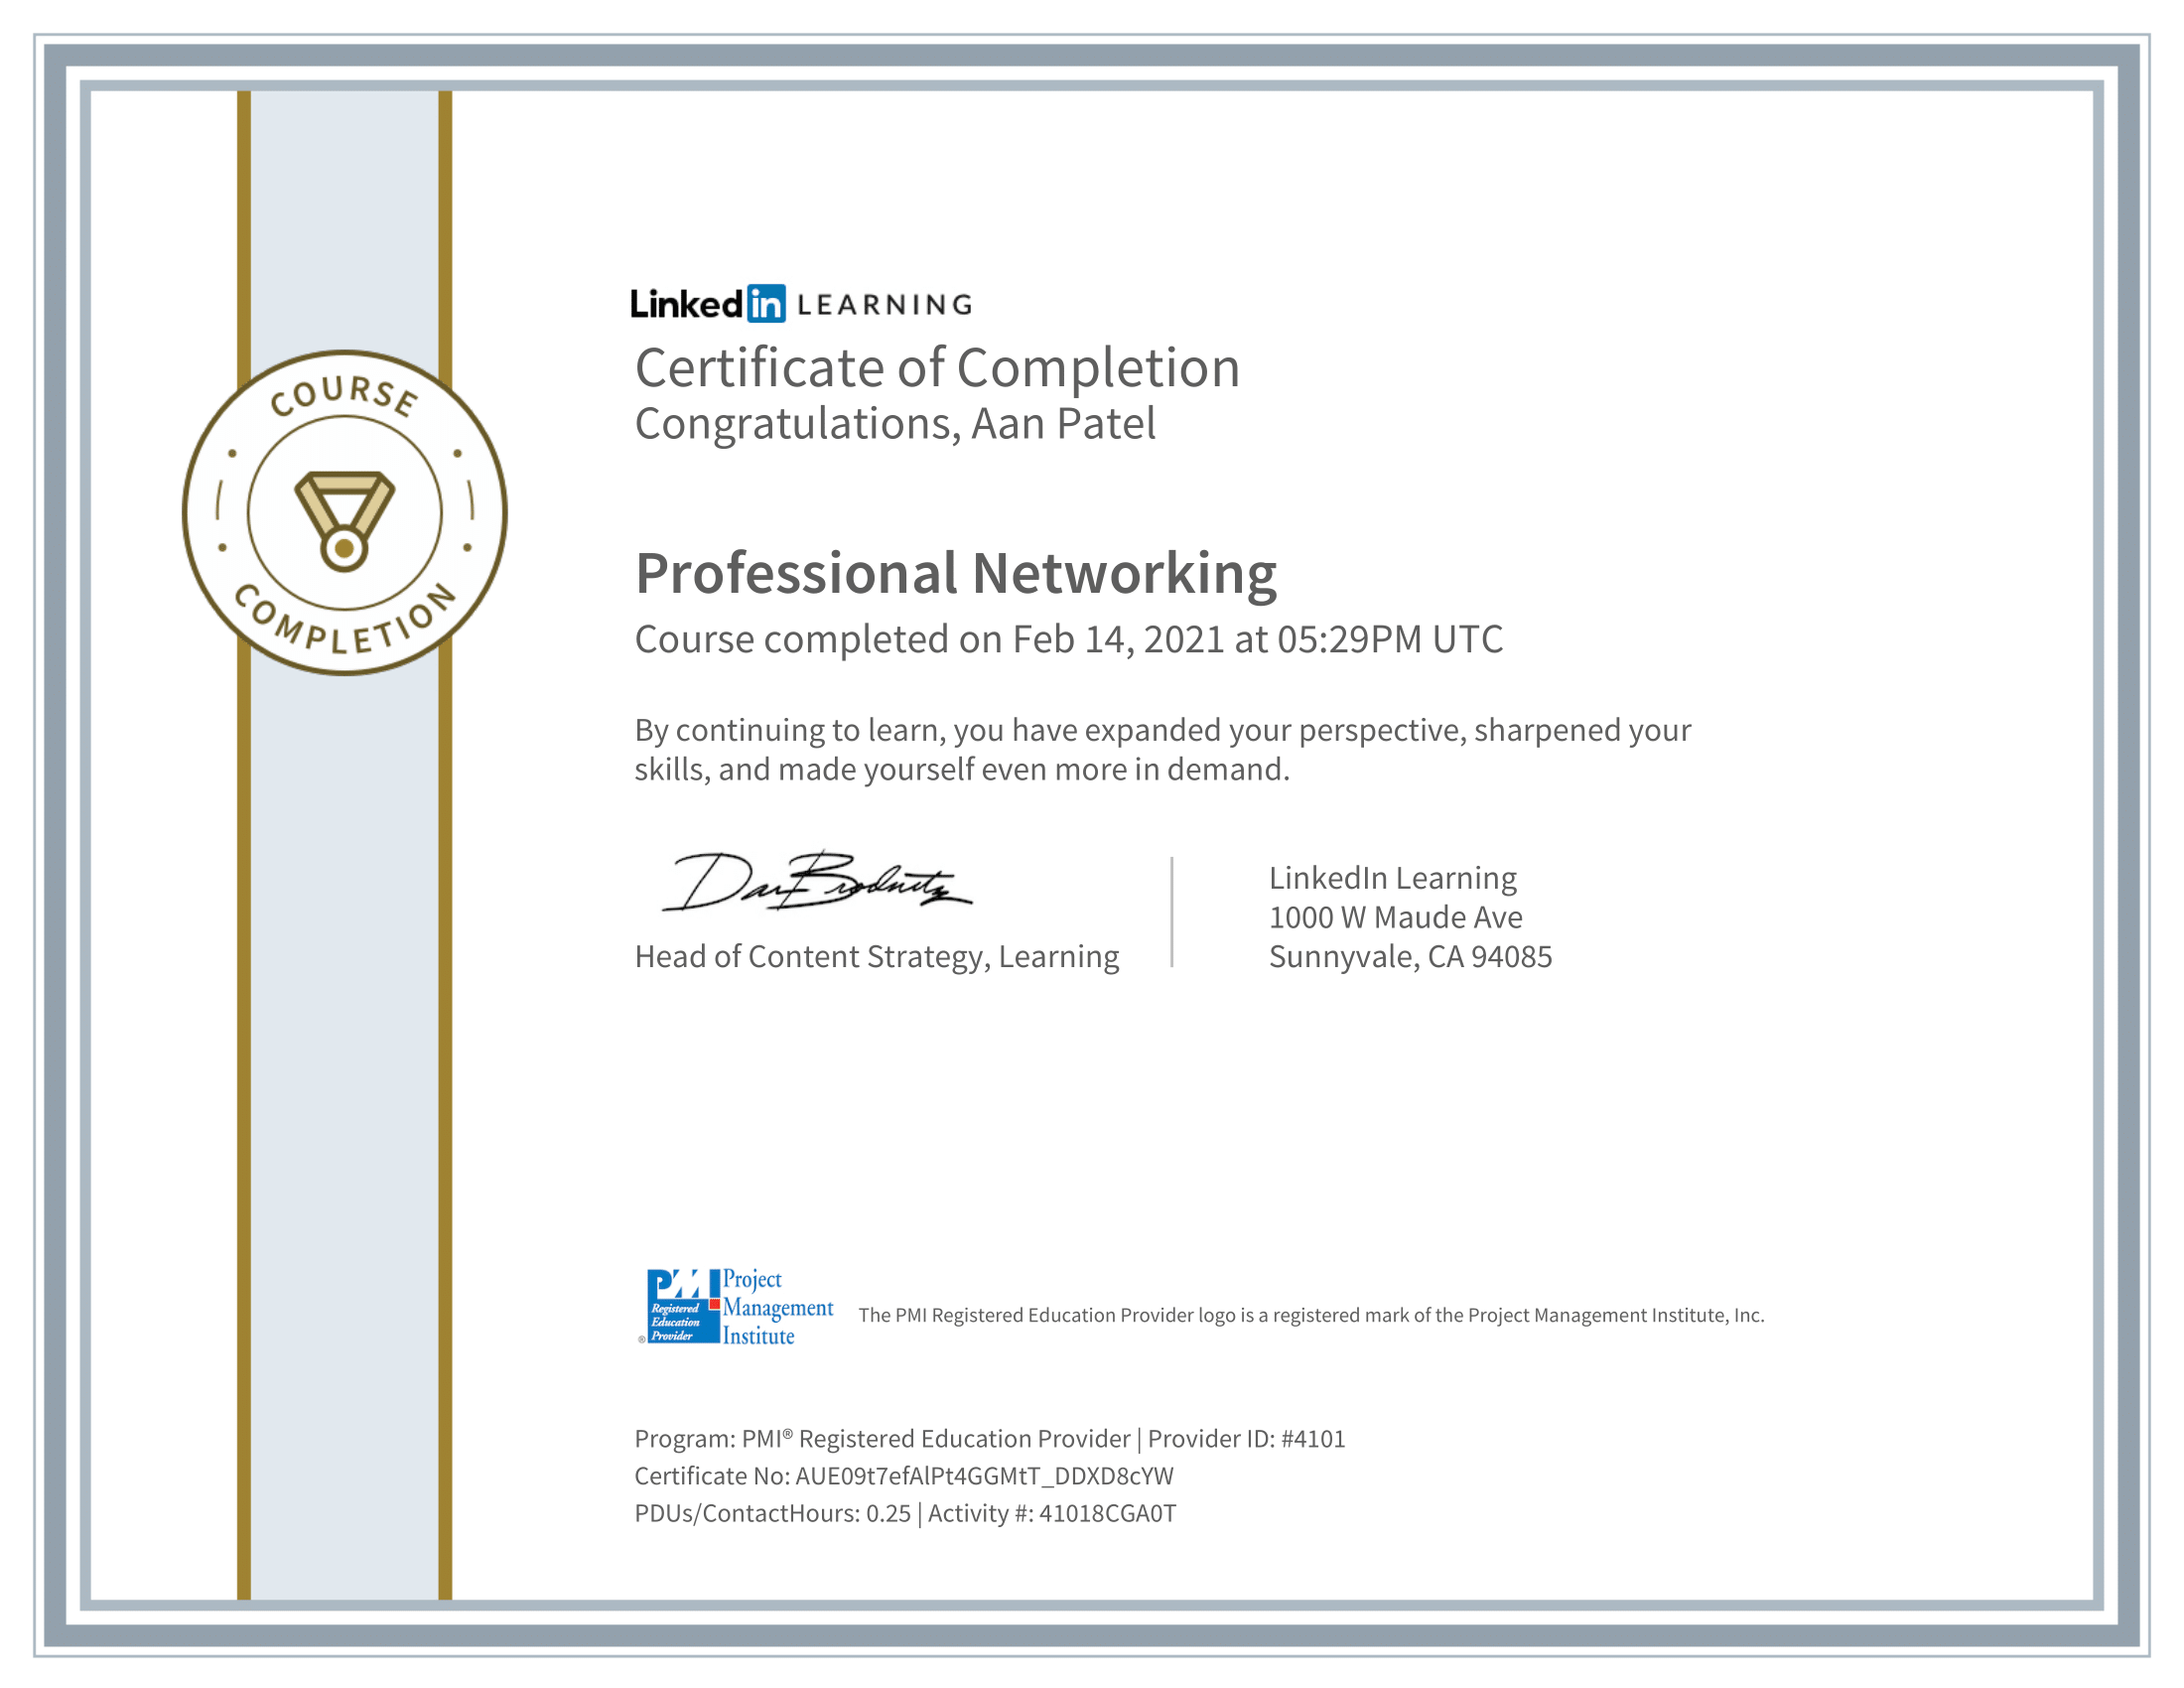 A LinkedIn Learning certificate